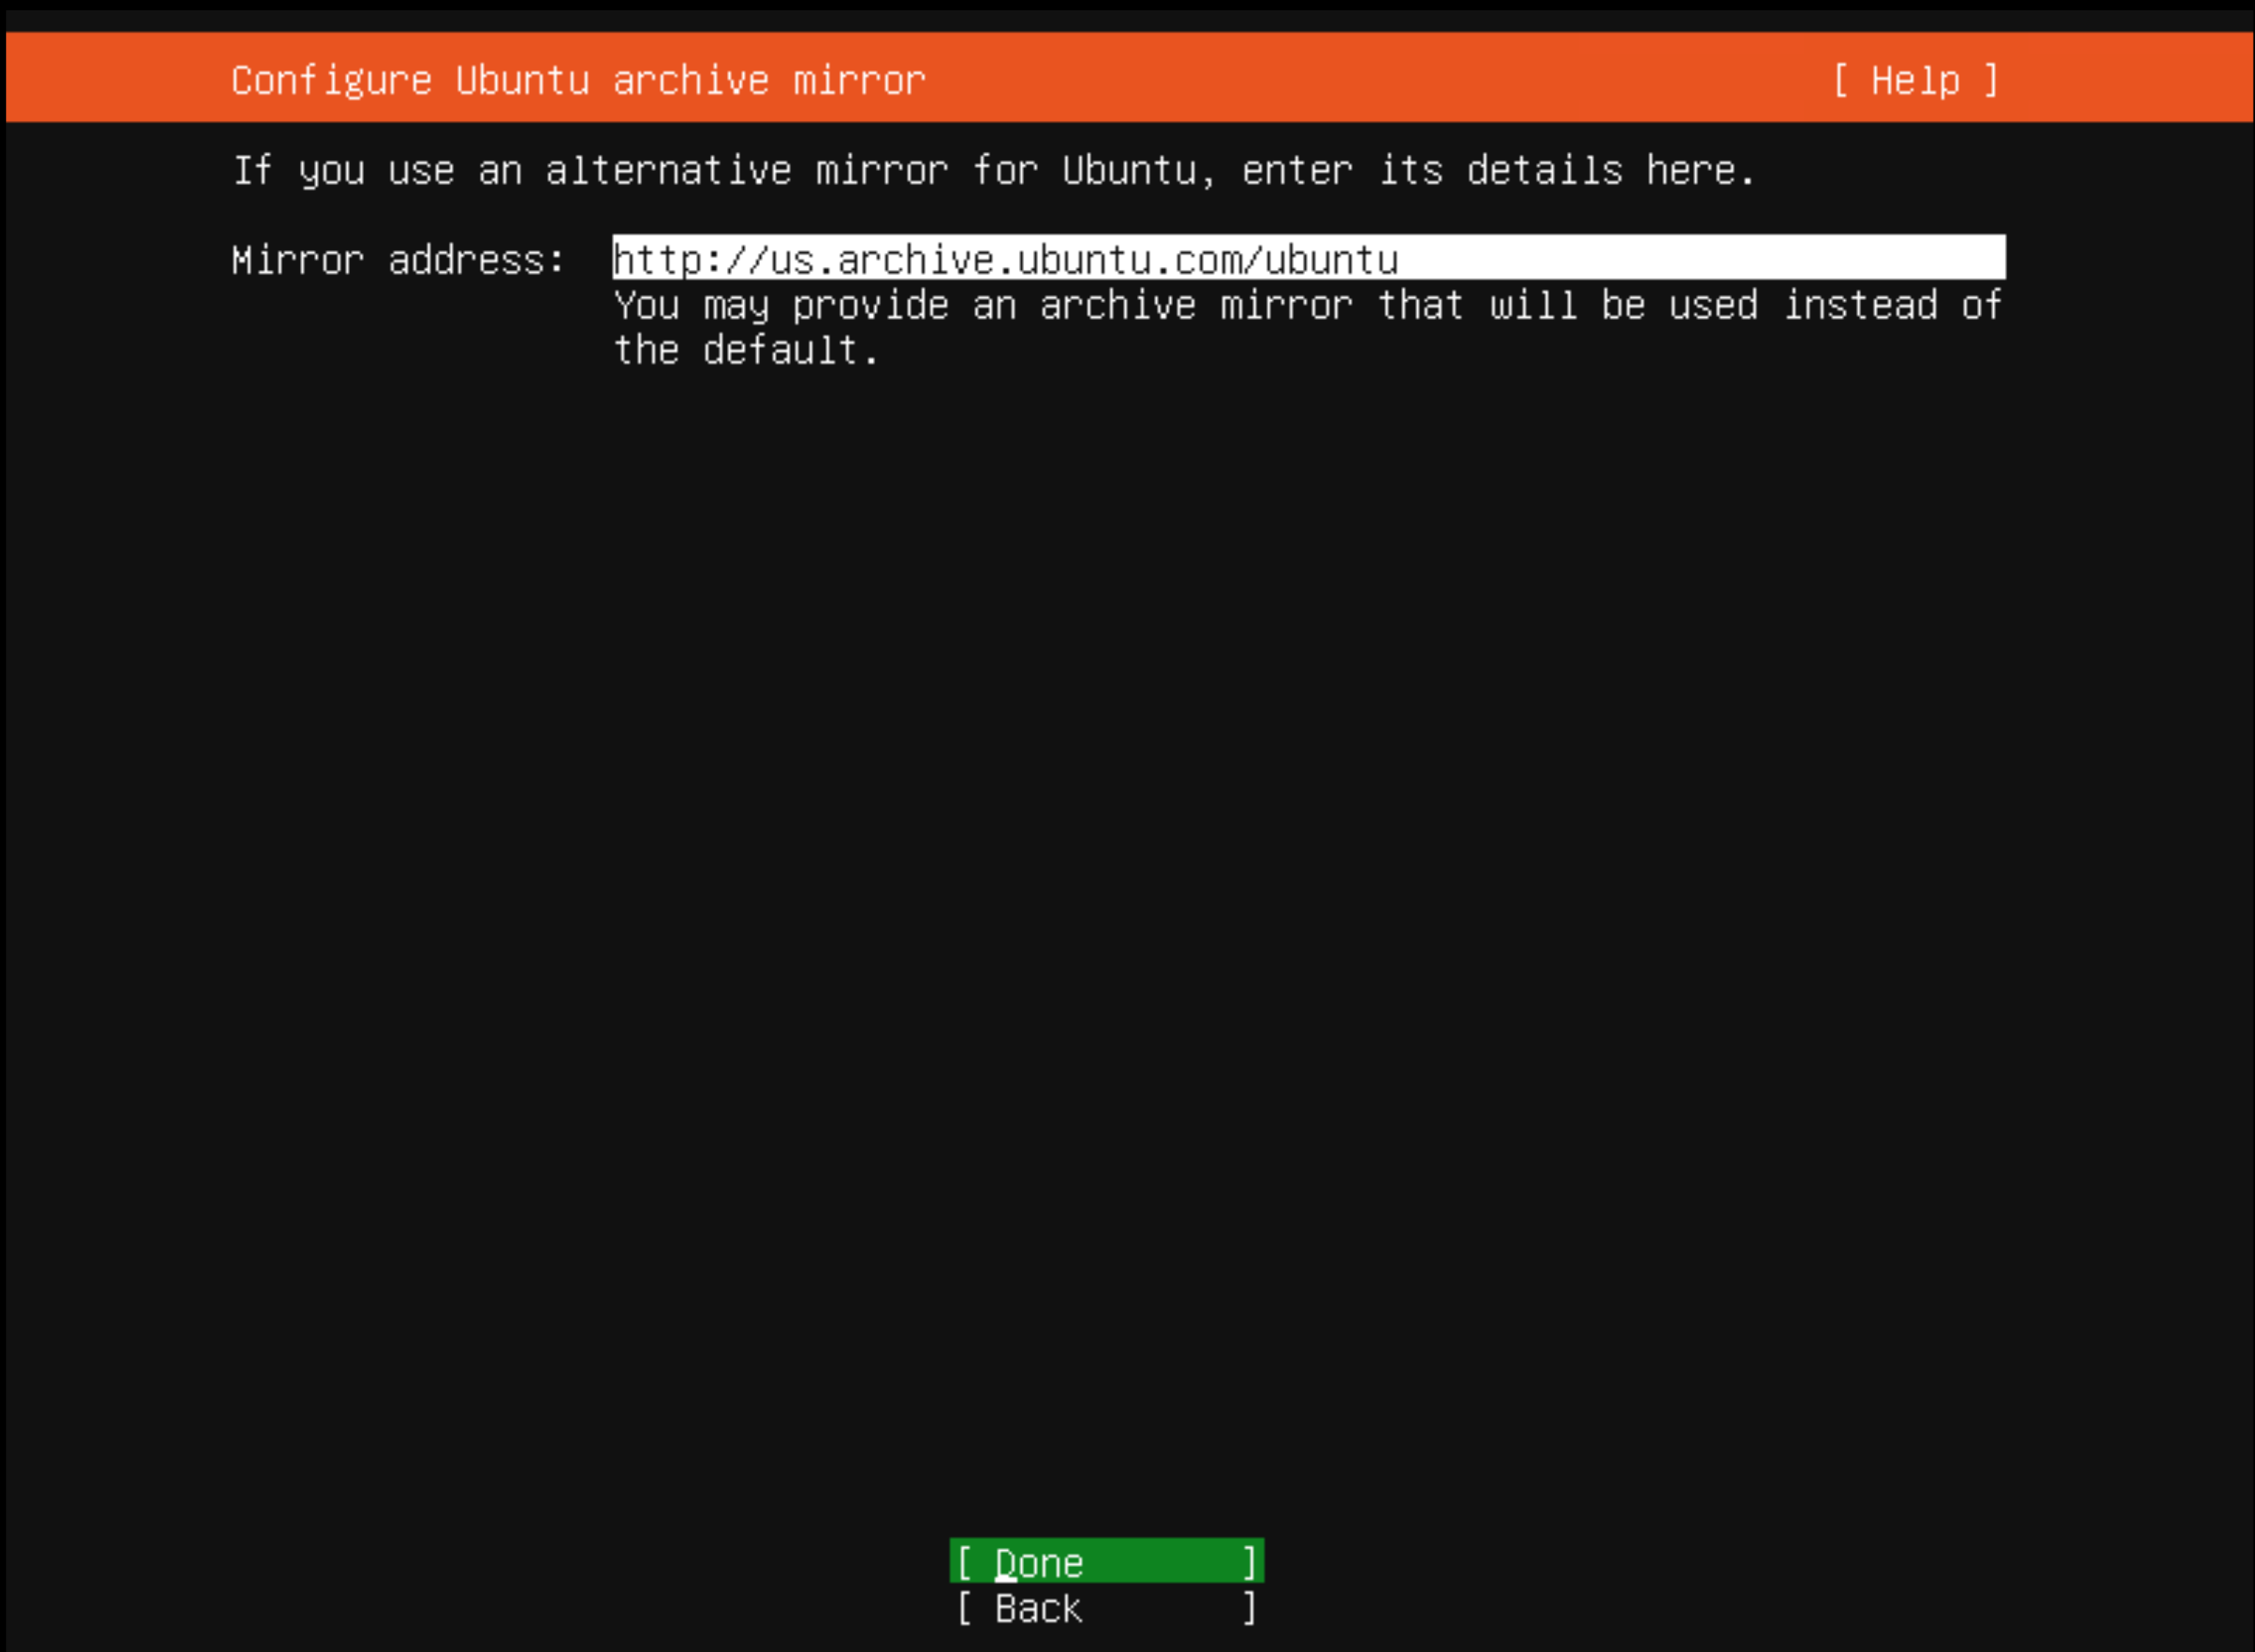 Tenth screenshot of an Ubuntu installation.